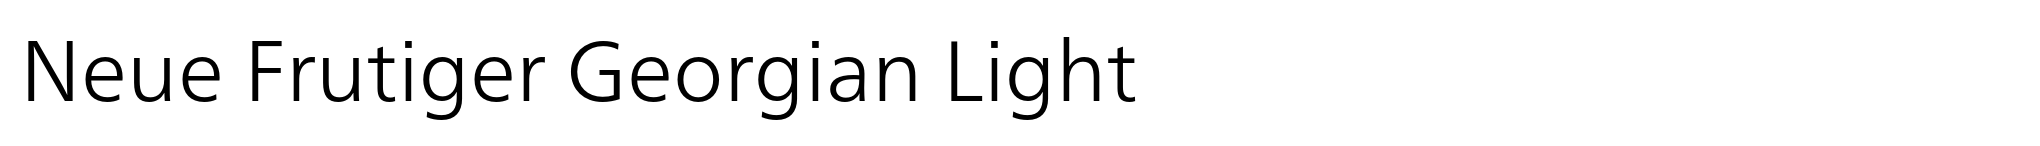 Neue Frutiger Georgian Light image